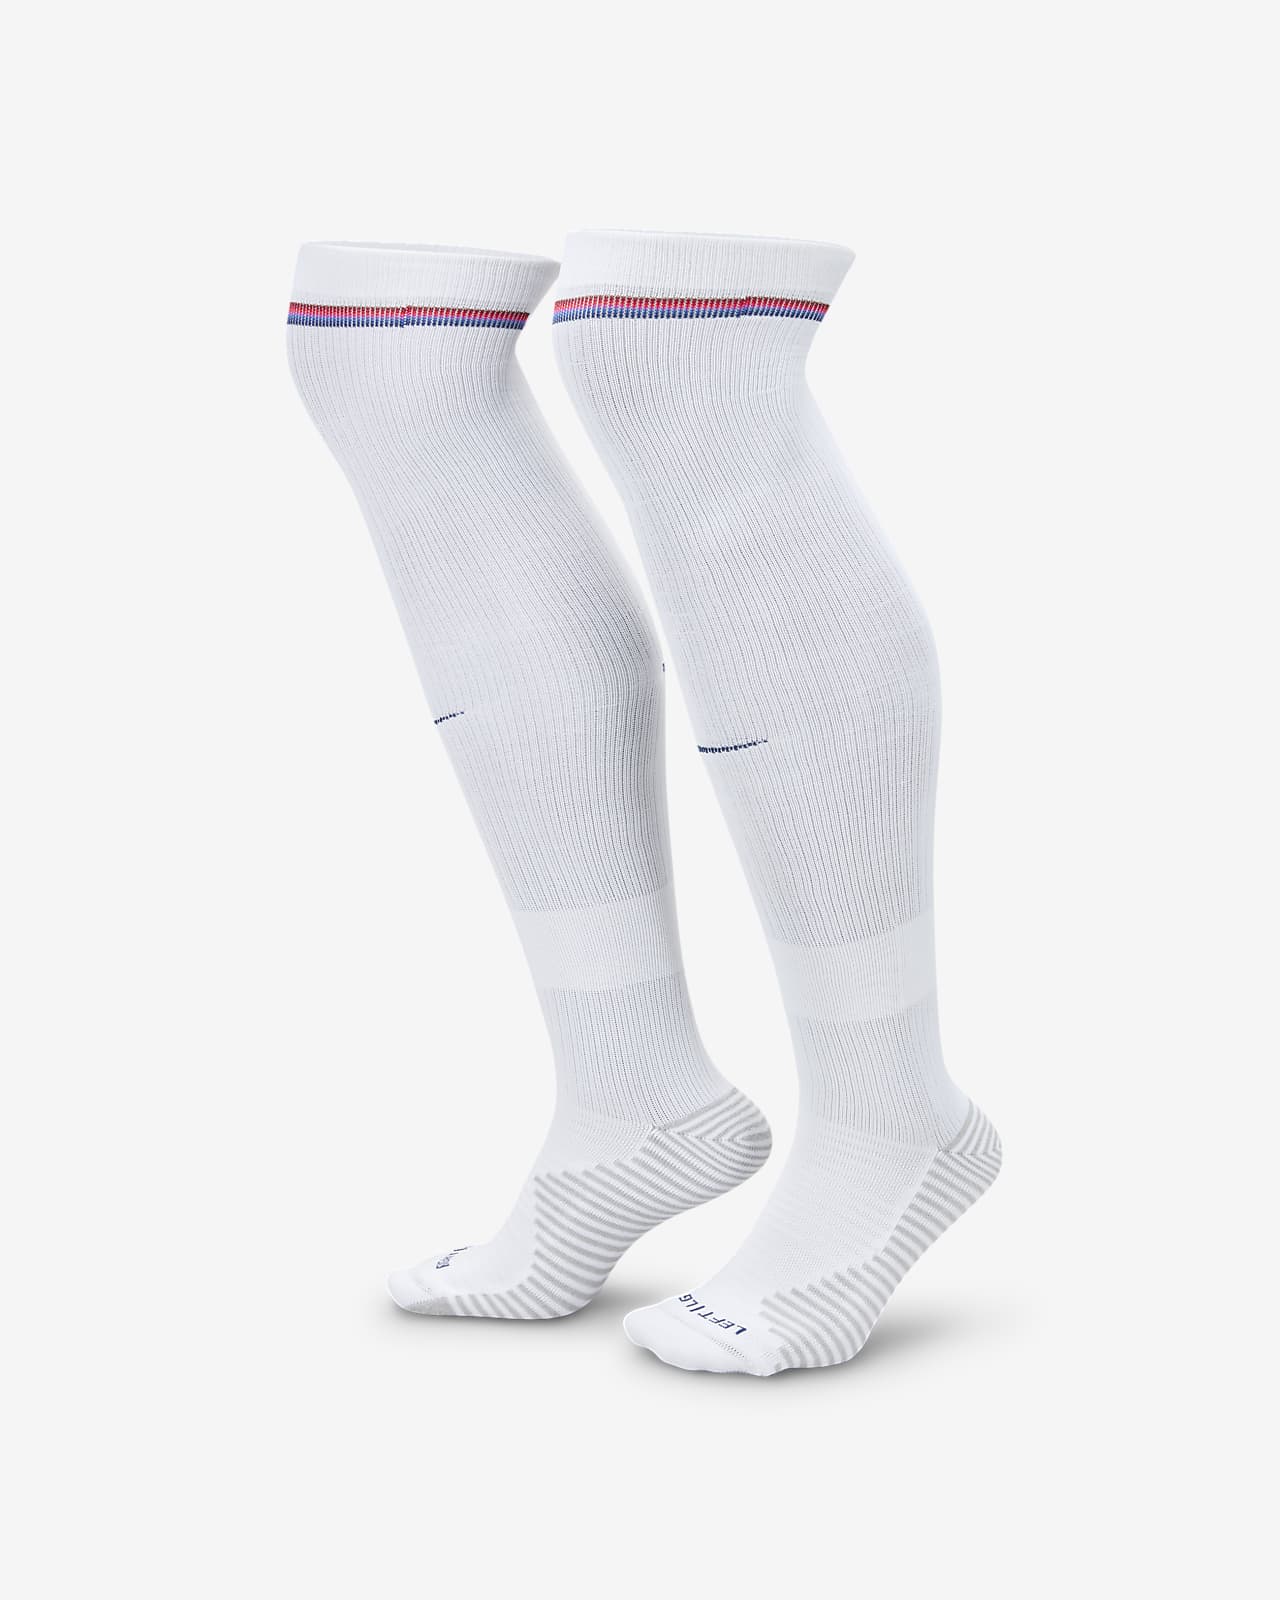 England Strike Home Nike Dri-FIT Football Knee-High Socks